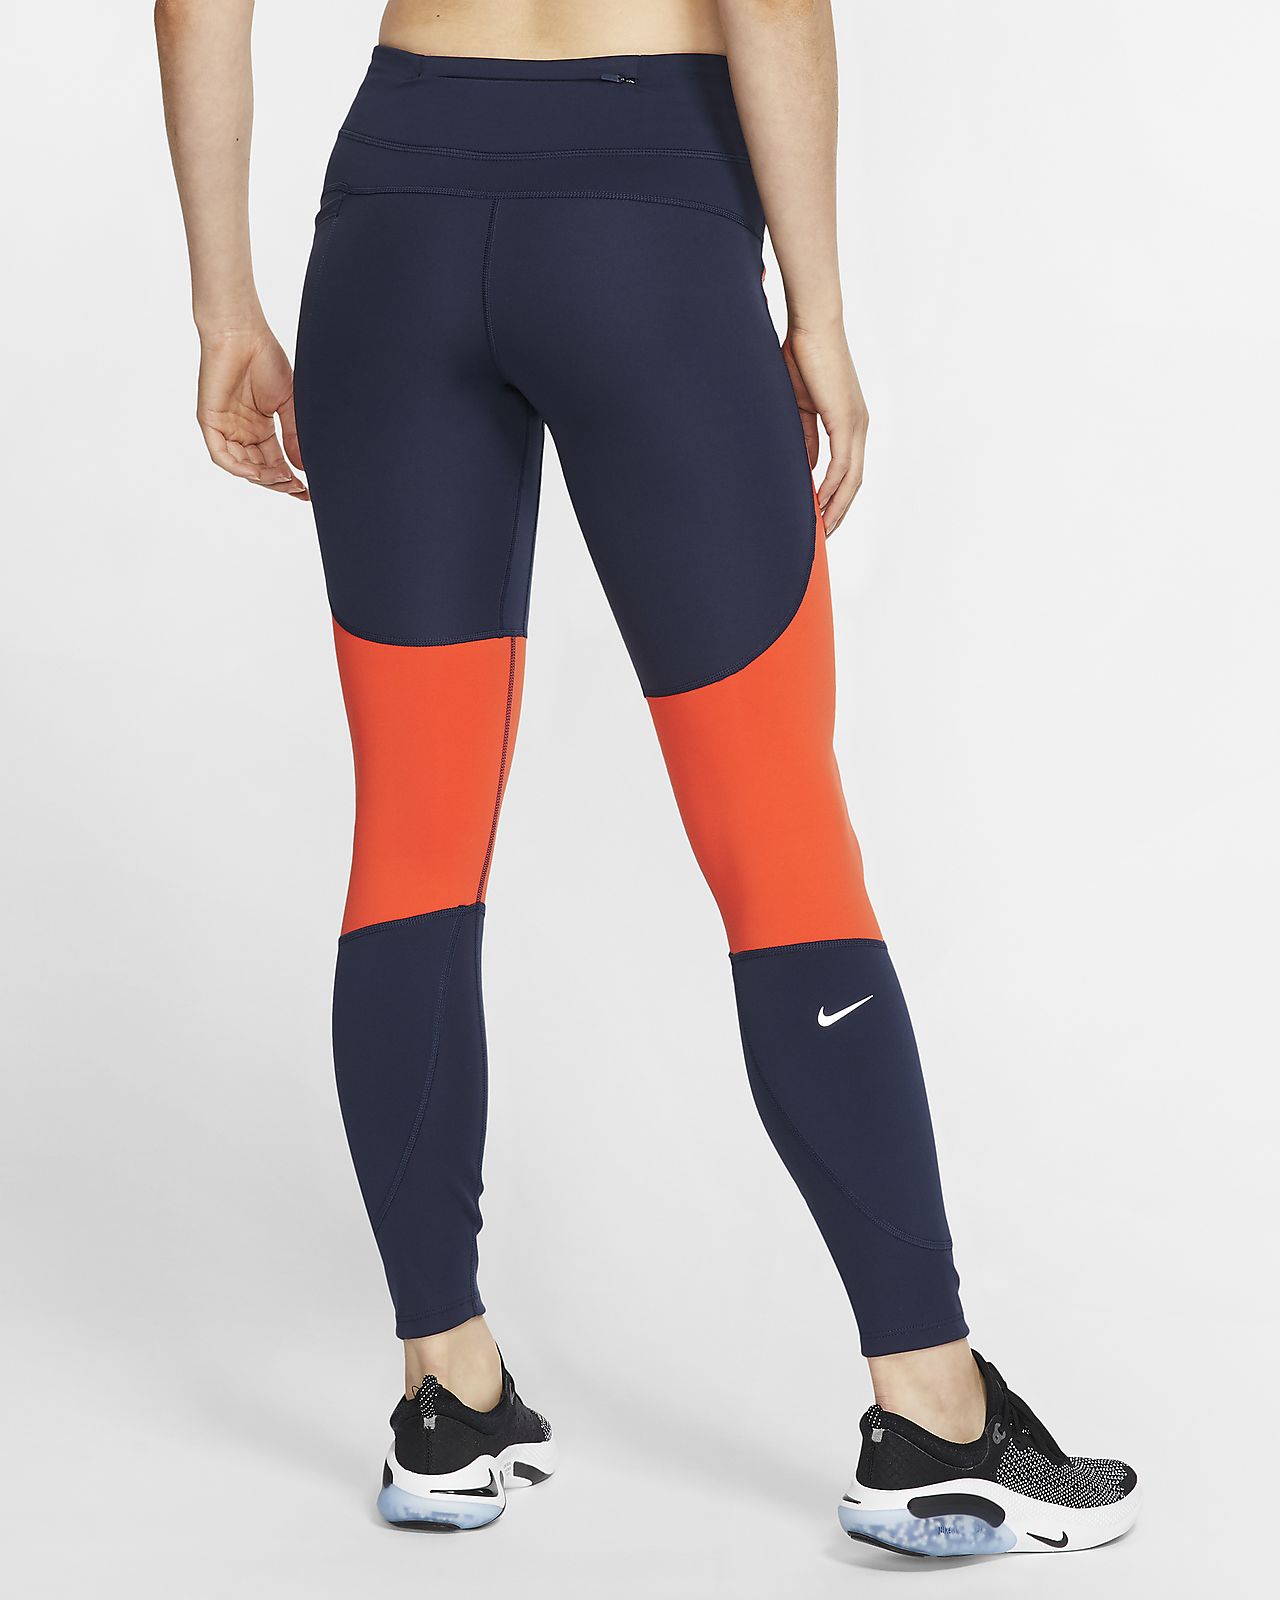 blue and orange nike leggings, OFF 74 